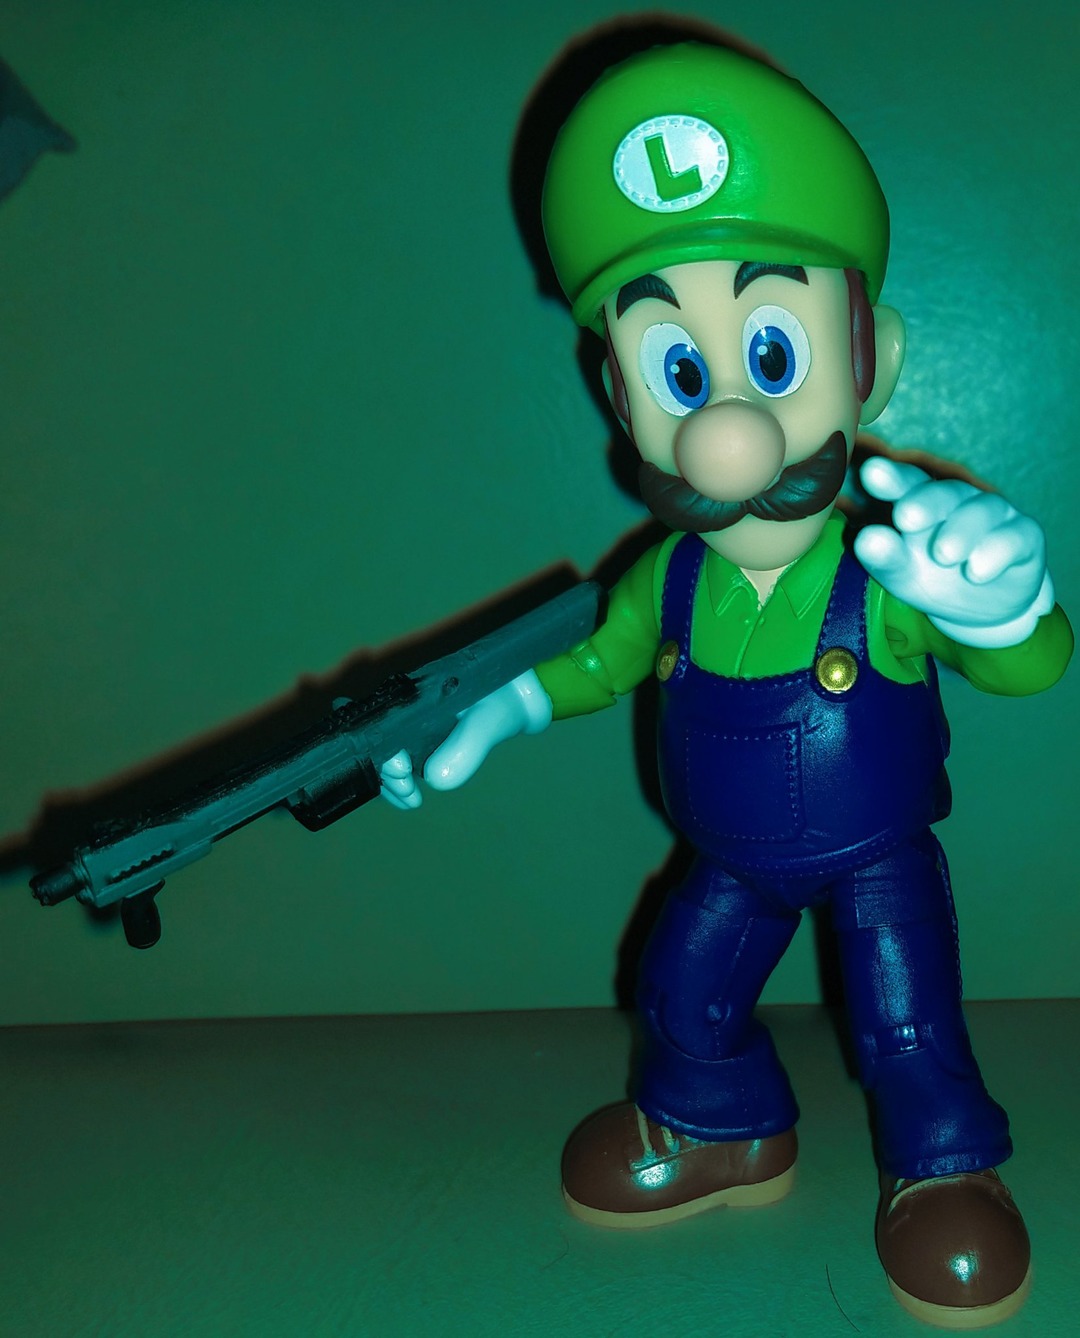 Luigi with a gun - meme